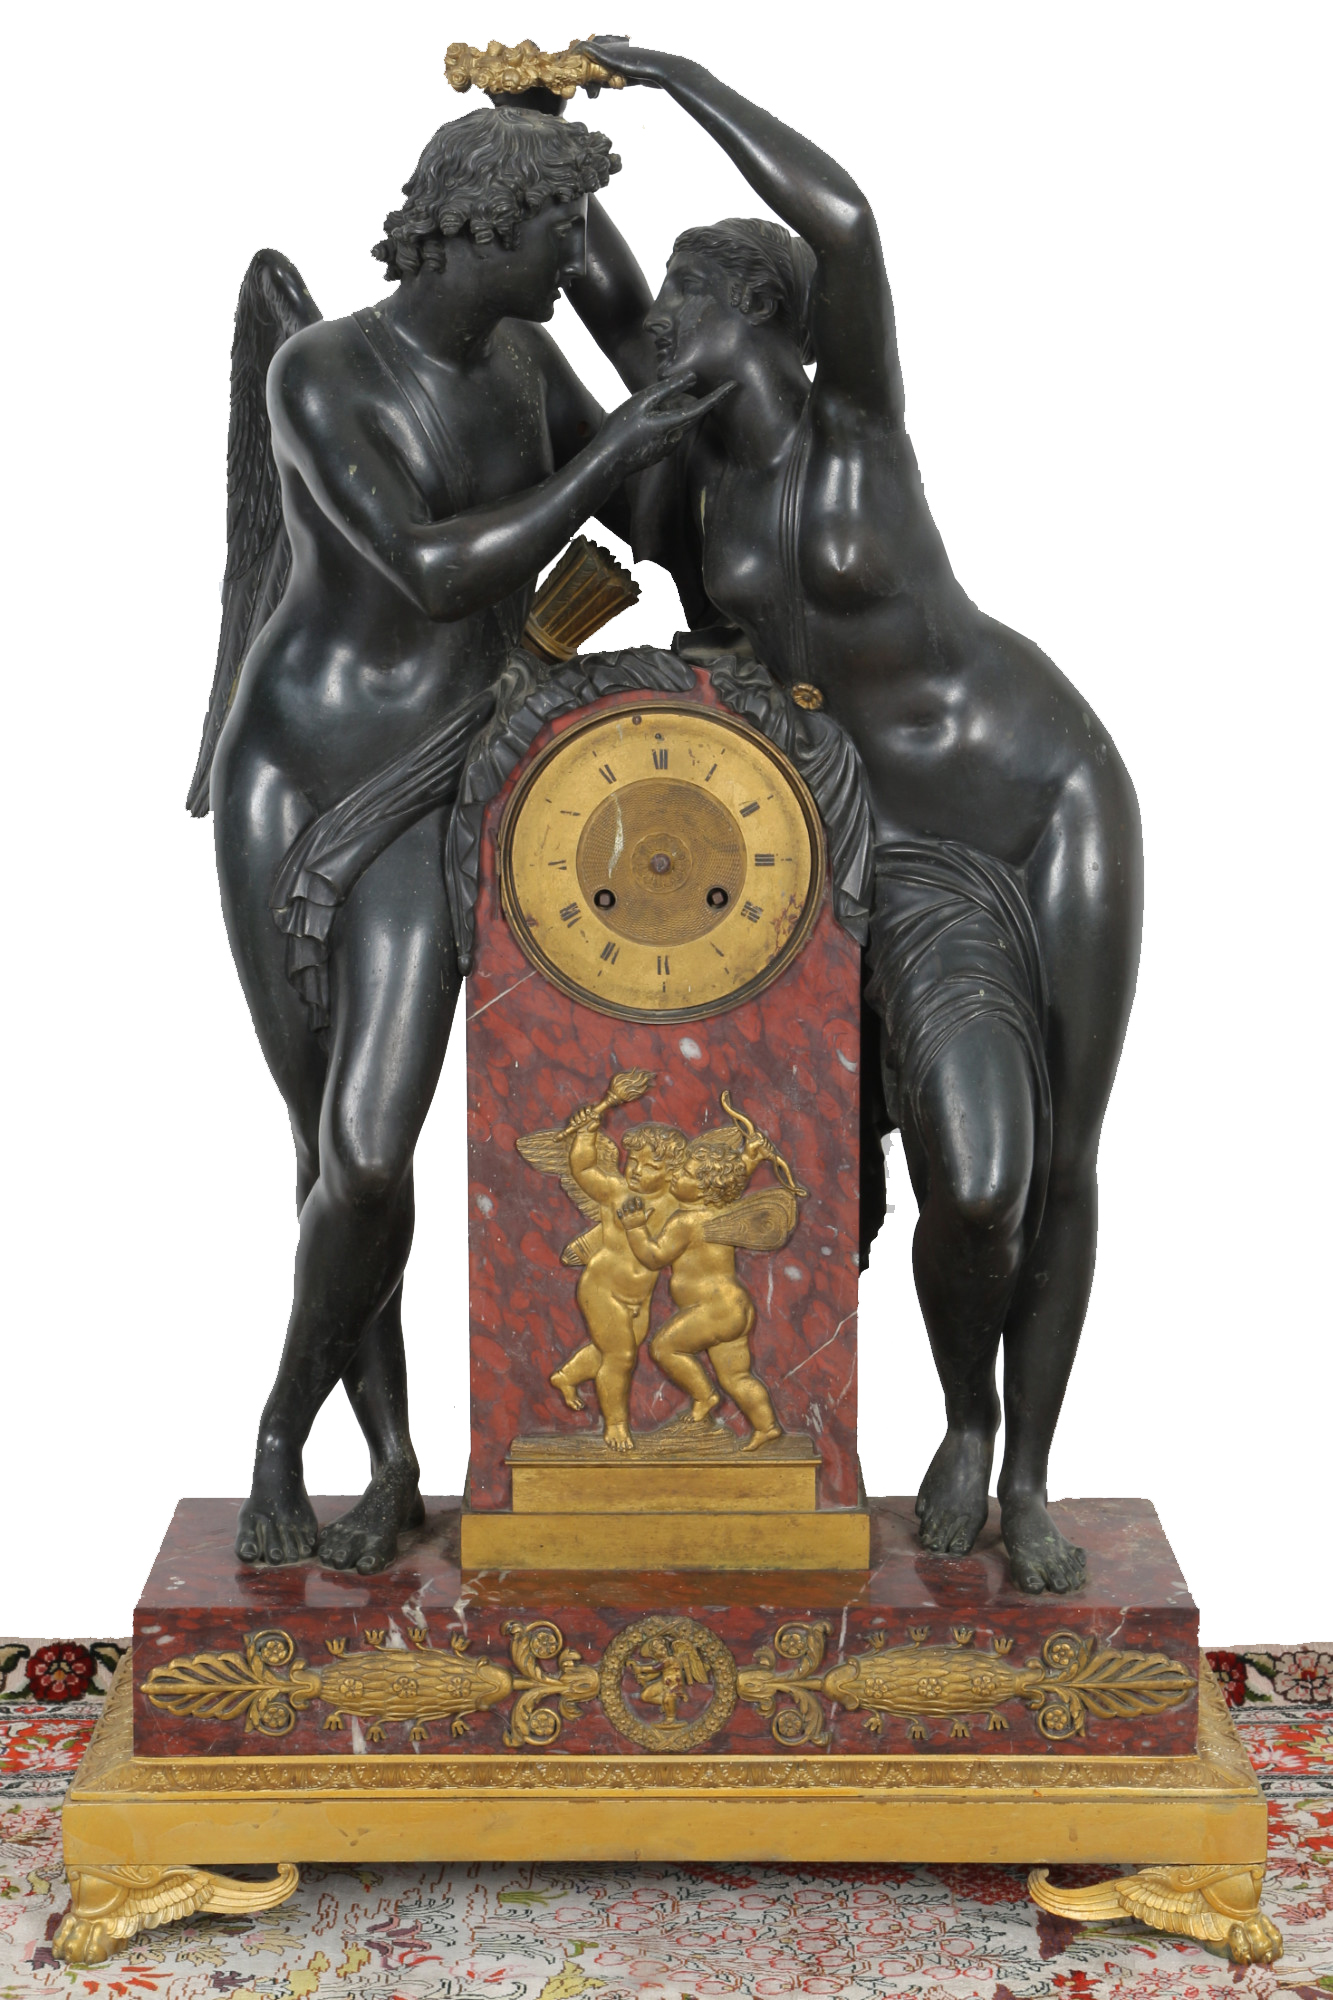 Huge bronze empire figural mantel clock Amor und Psyche France 19th century, riesige Empire Figuren-